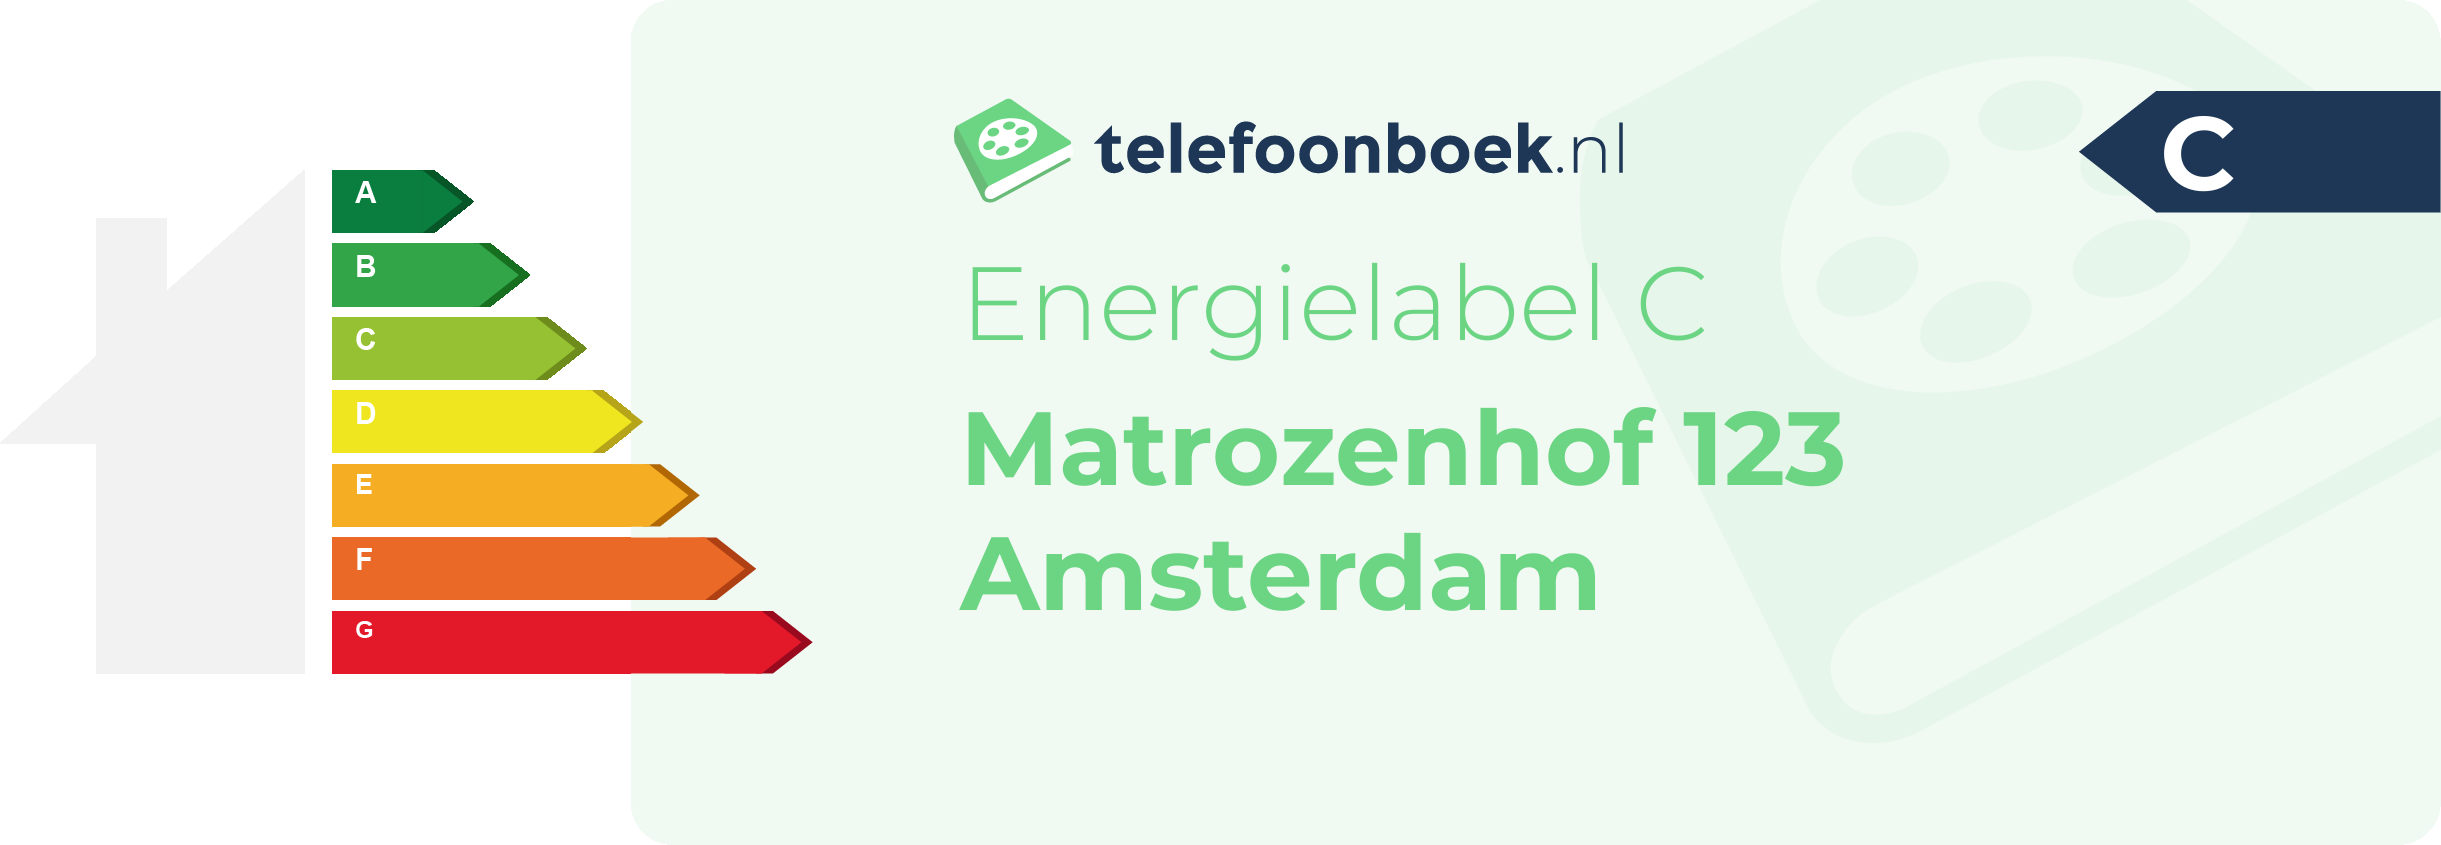 Energielabel Matrozenhof 123 Amsterdam